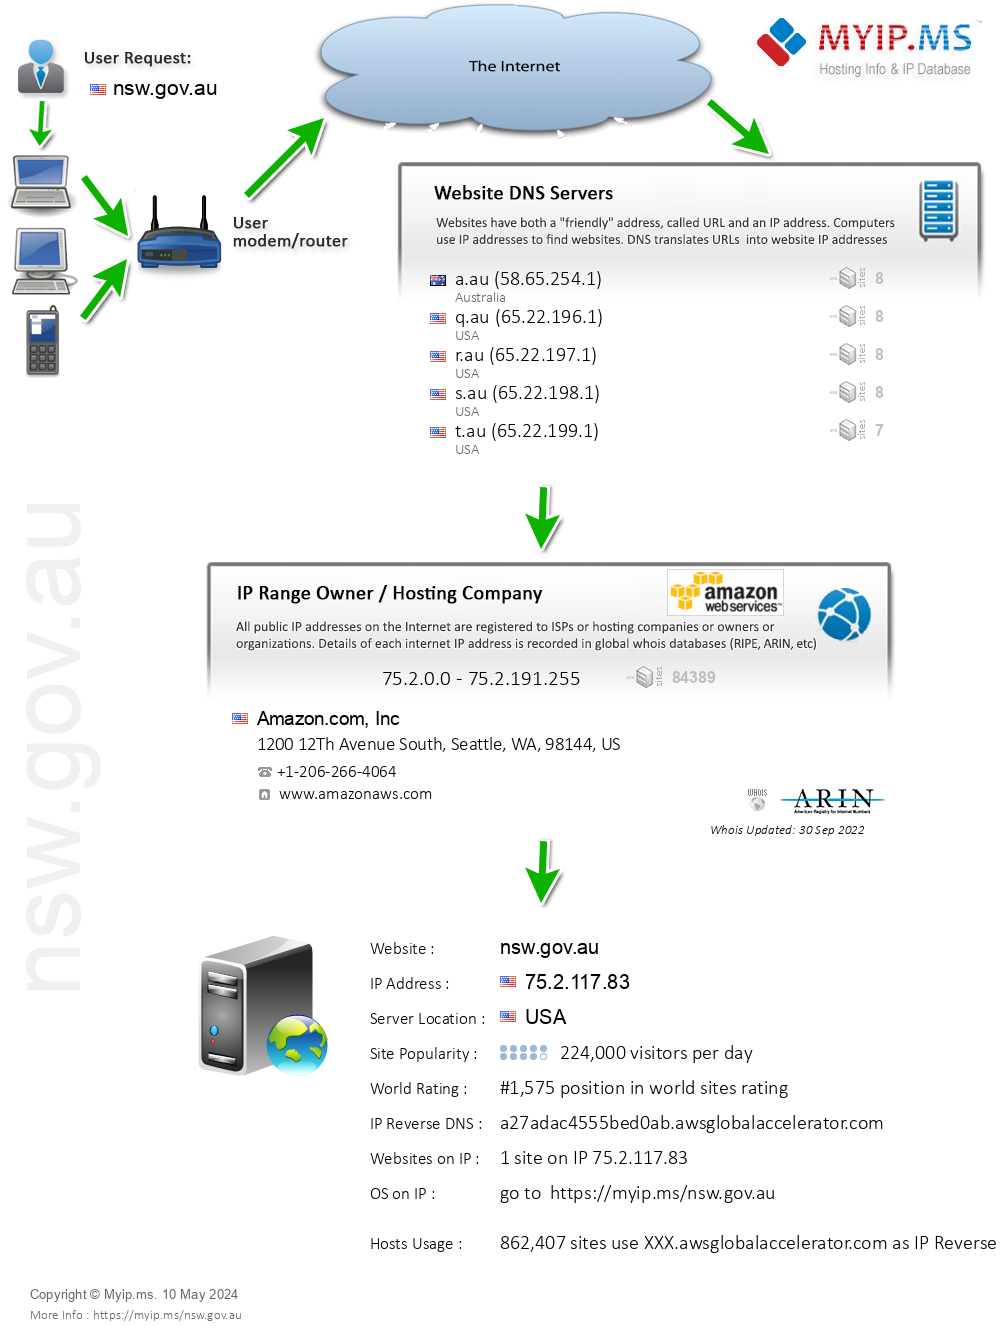 Nsw.gov.au - Website Hosting Visual IP Diagram